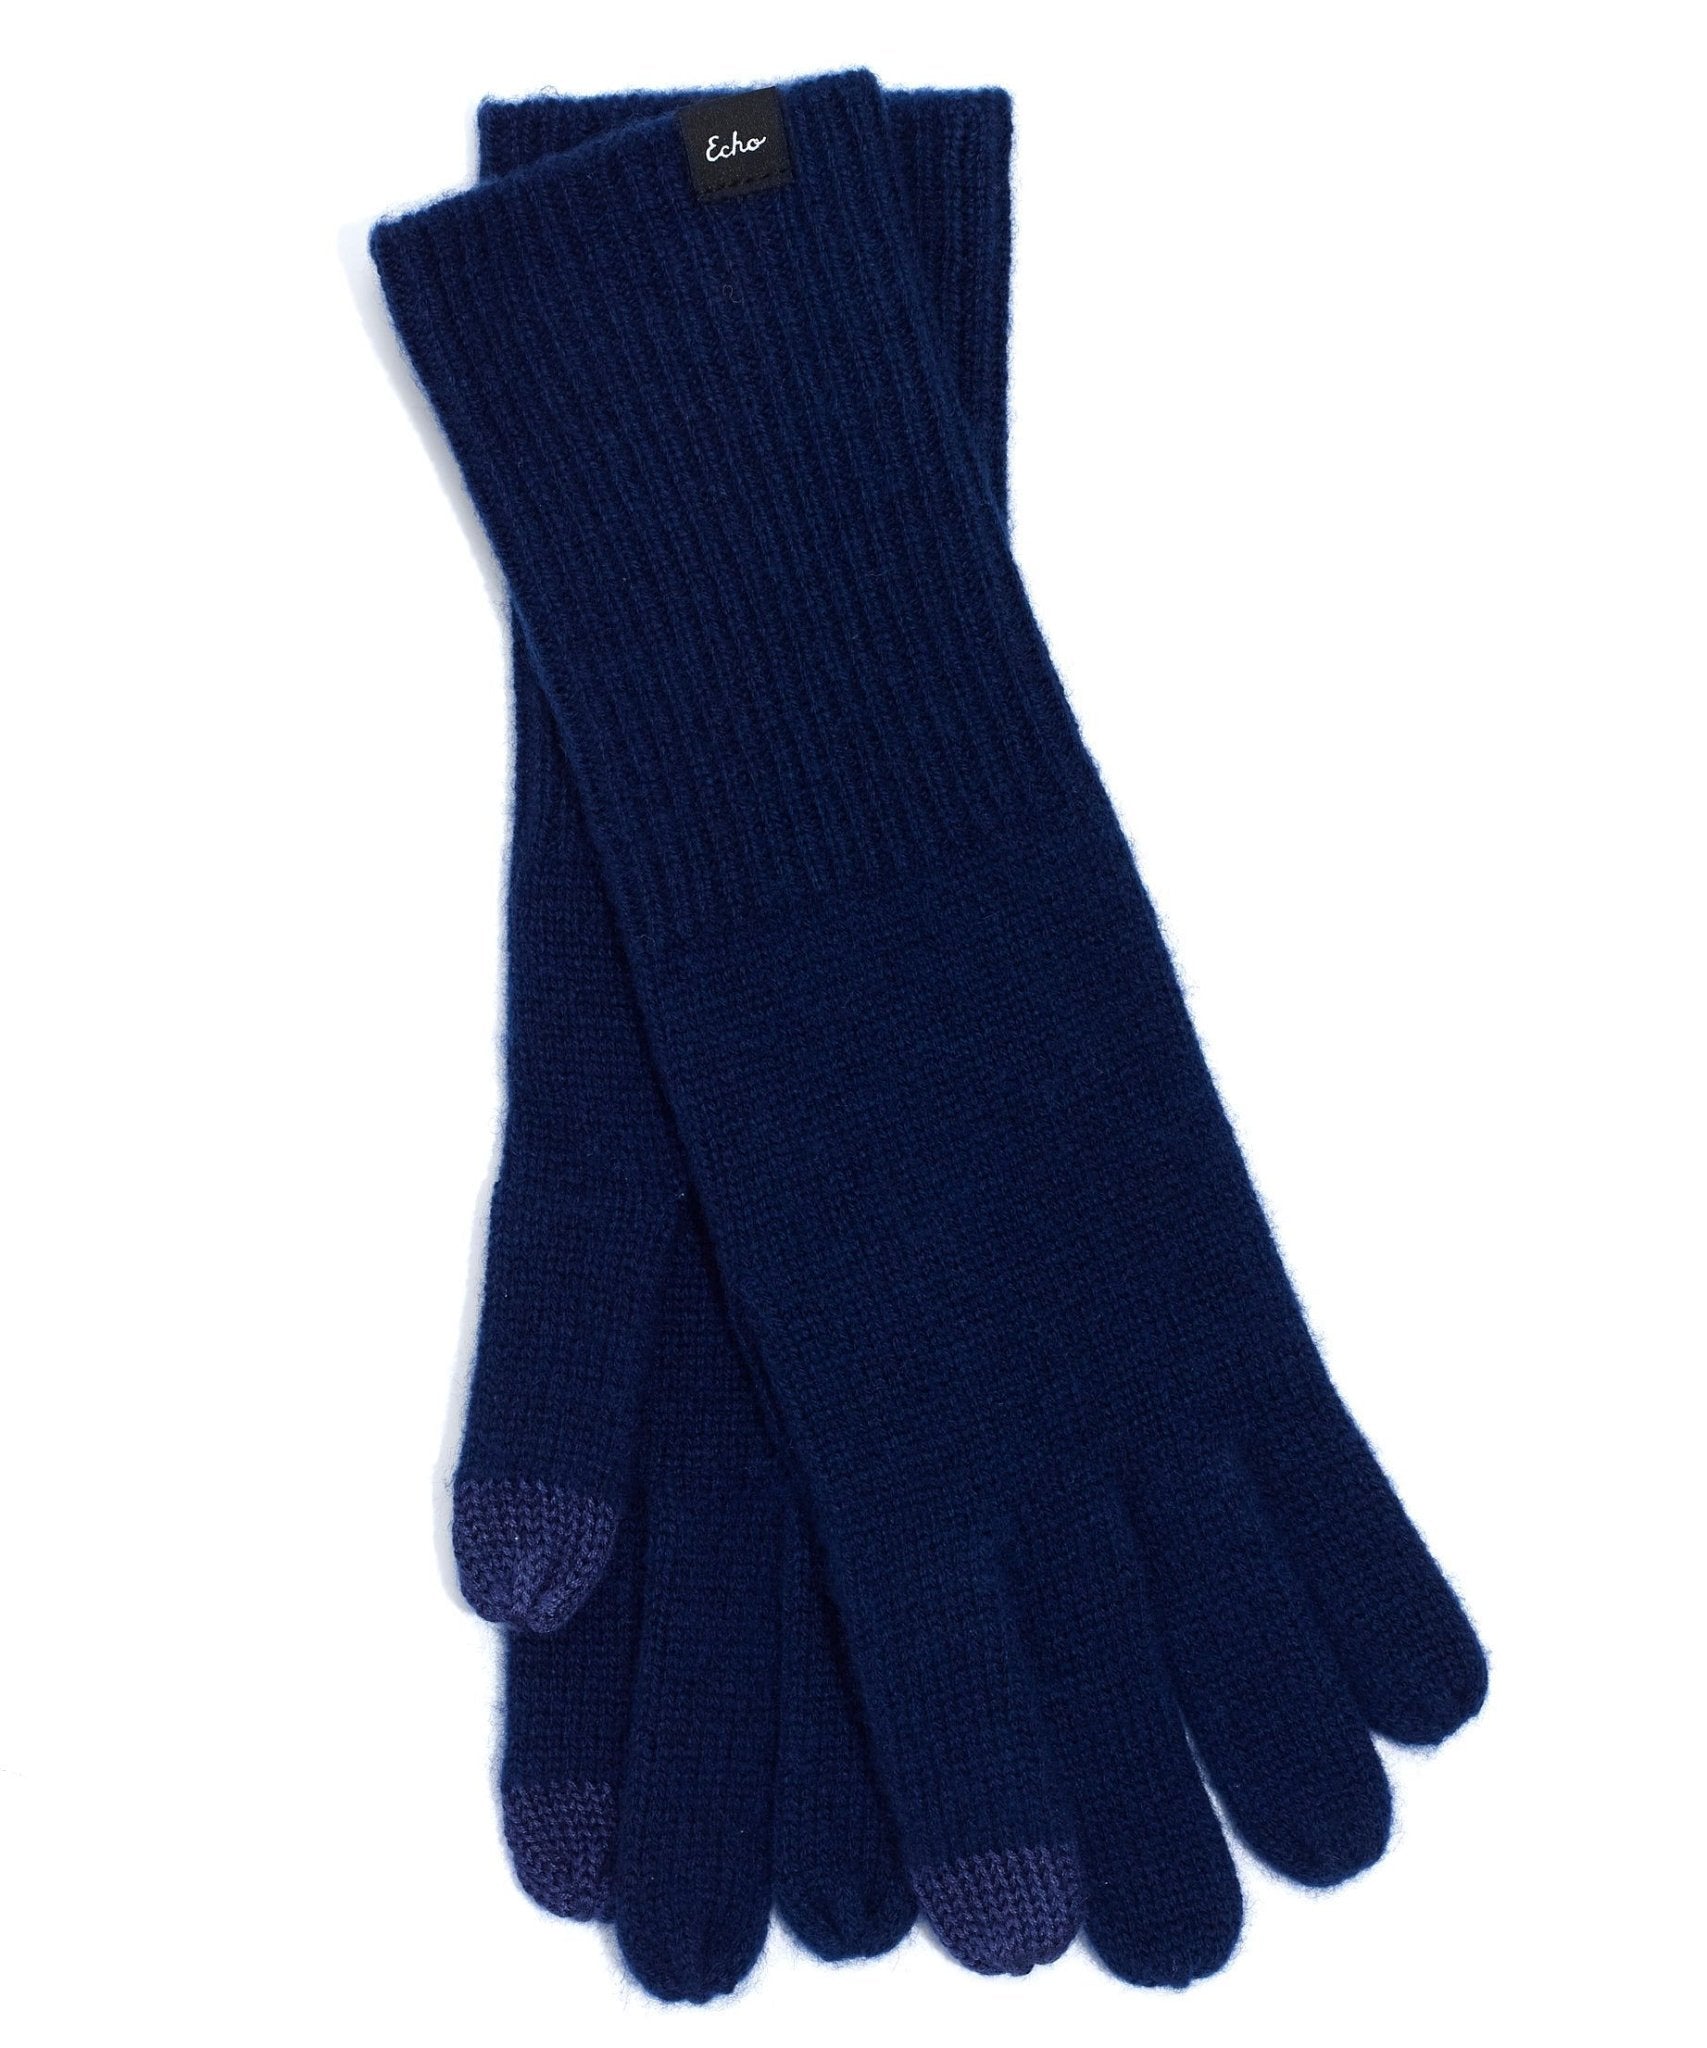 Cashmere Blend Gloves - Echo - Danali - EC0613-NAVY-O/S